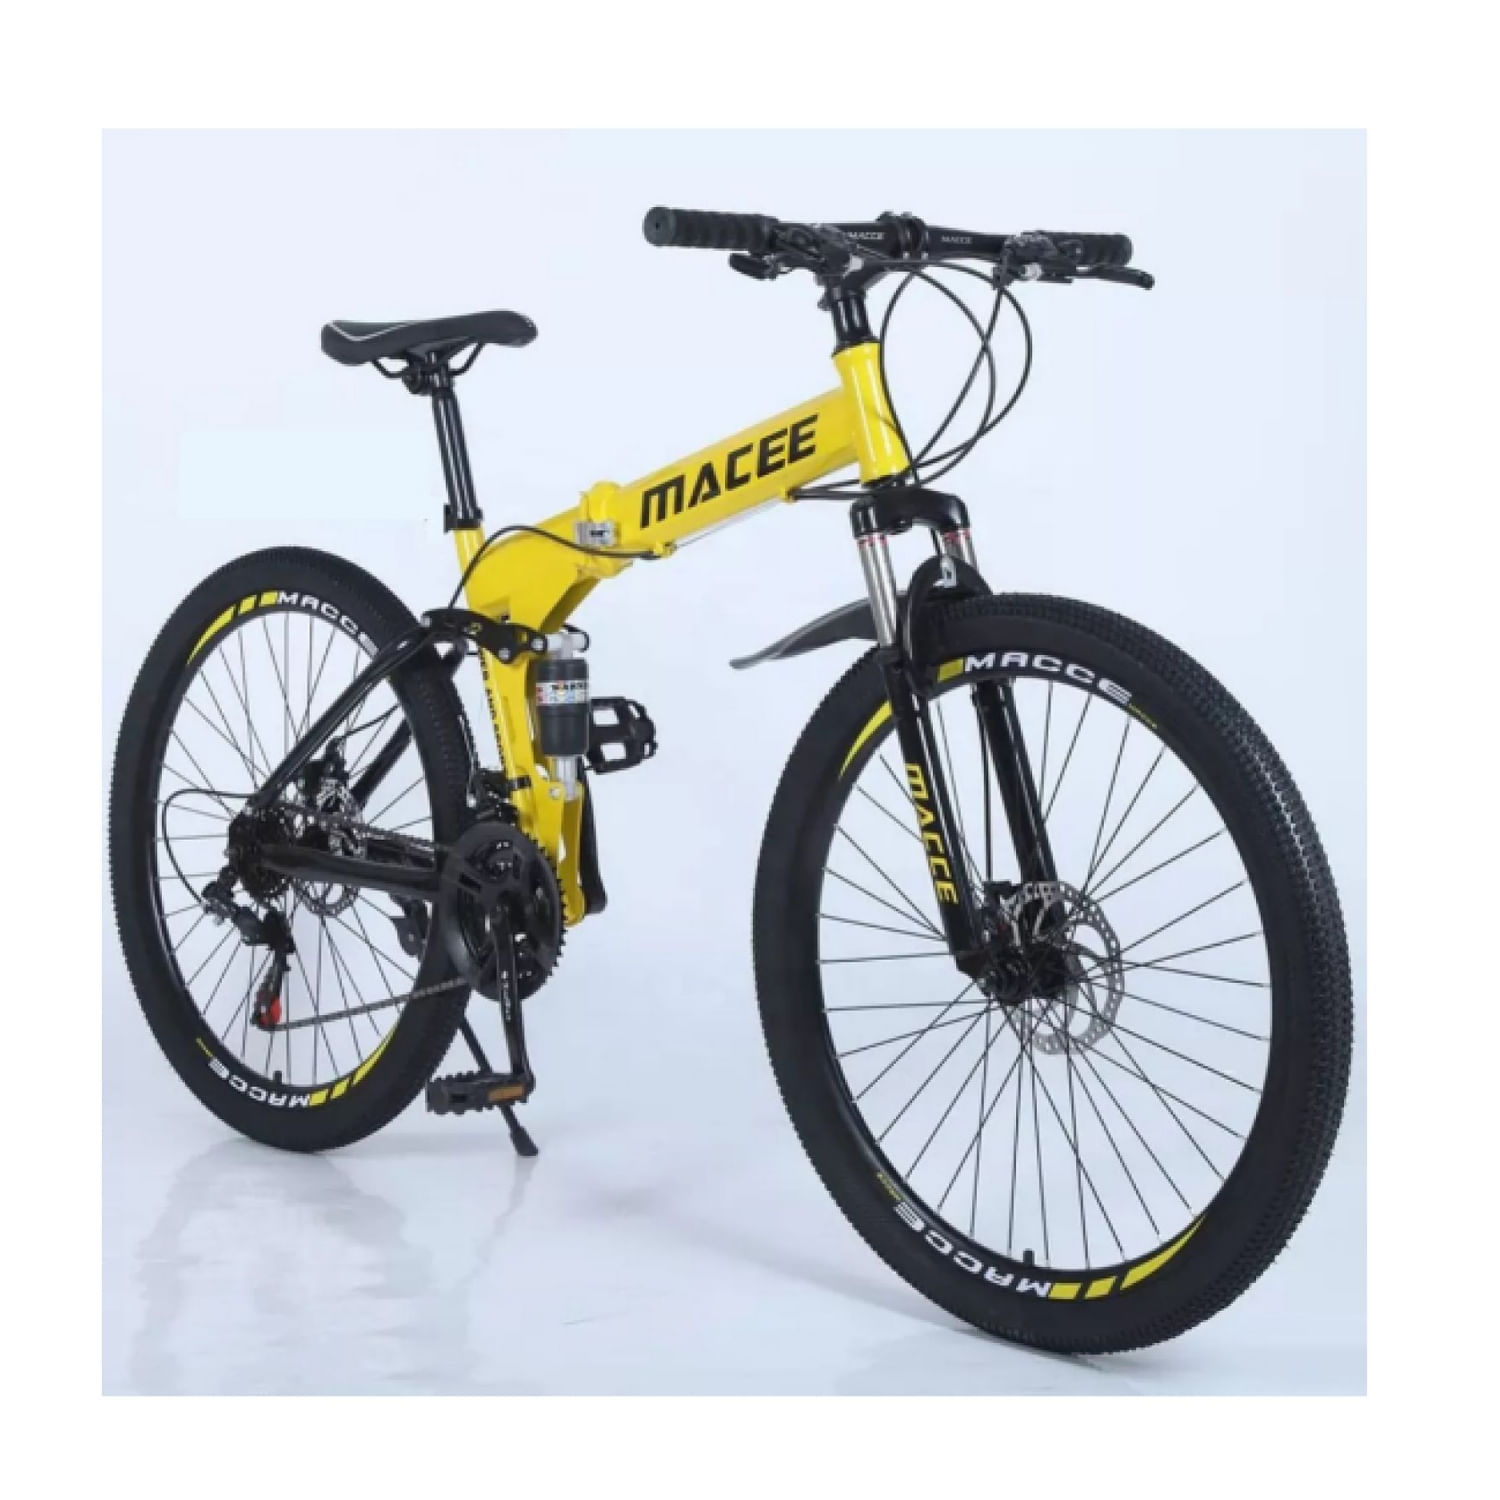 Bicicleta Montañera Plegable MACEE Aro 26 Diseño Rayos Color Amarillo